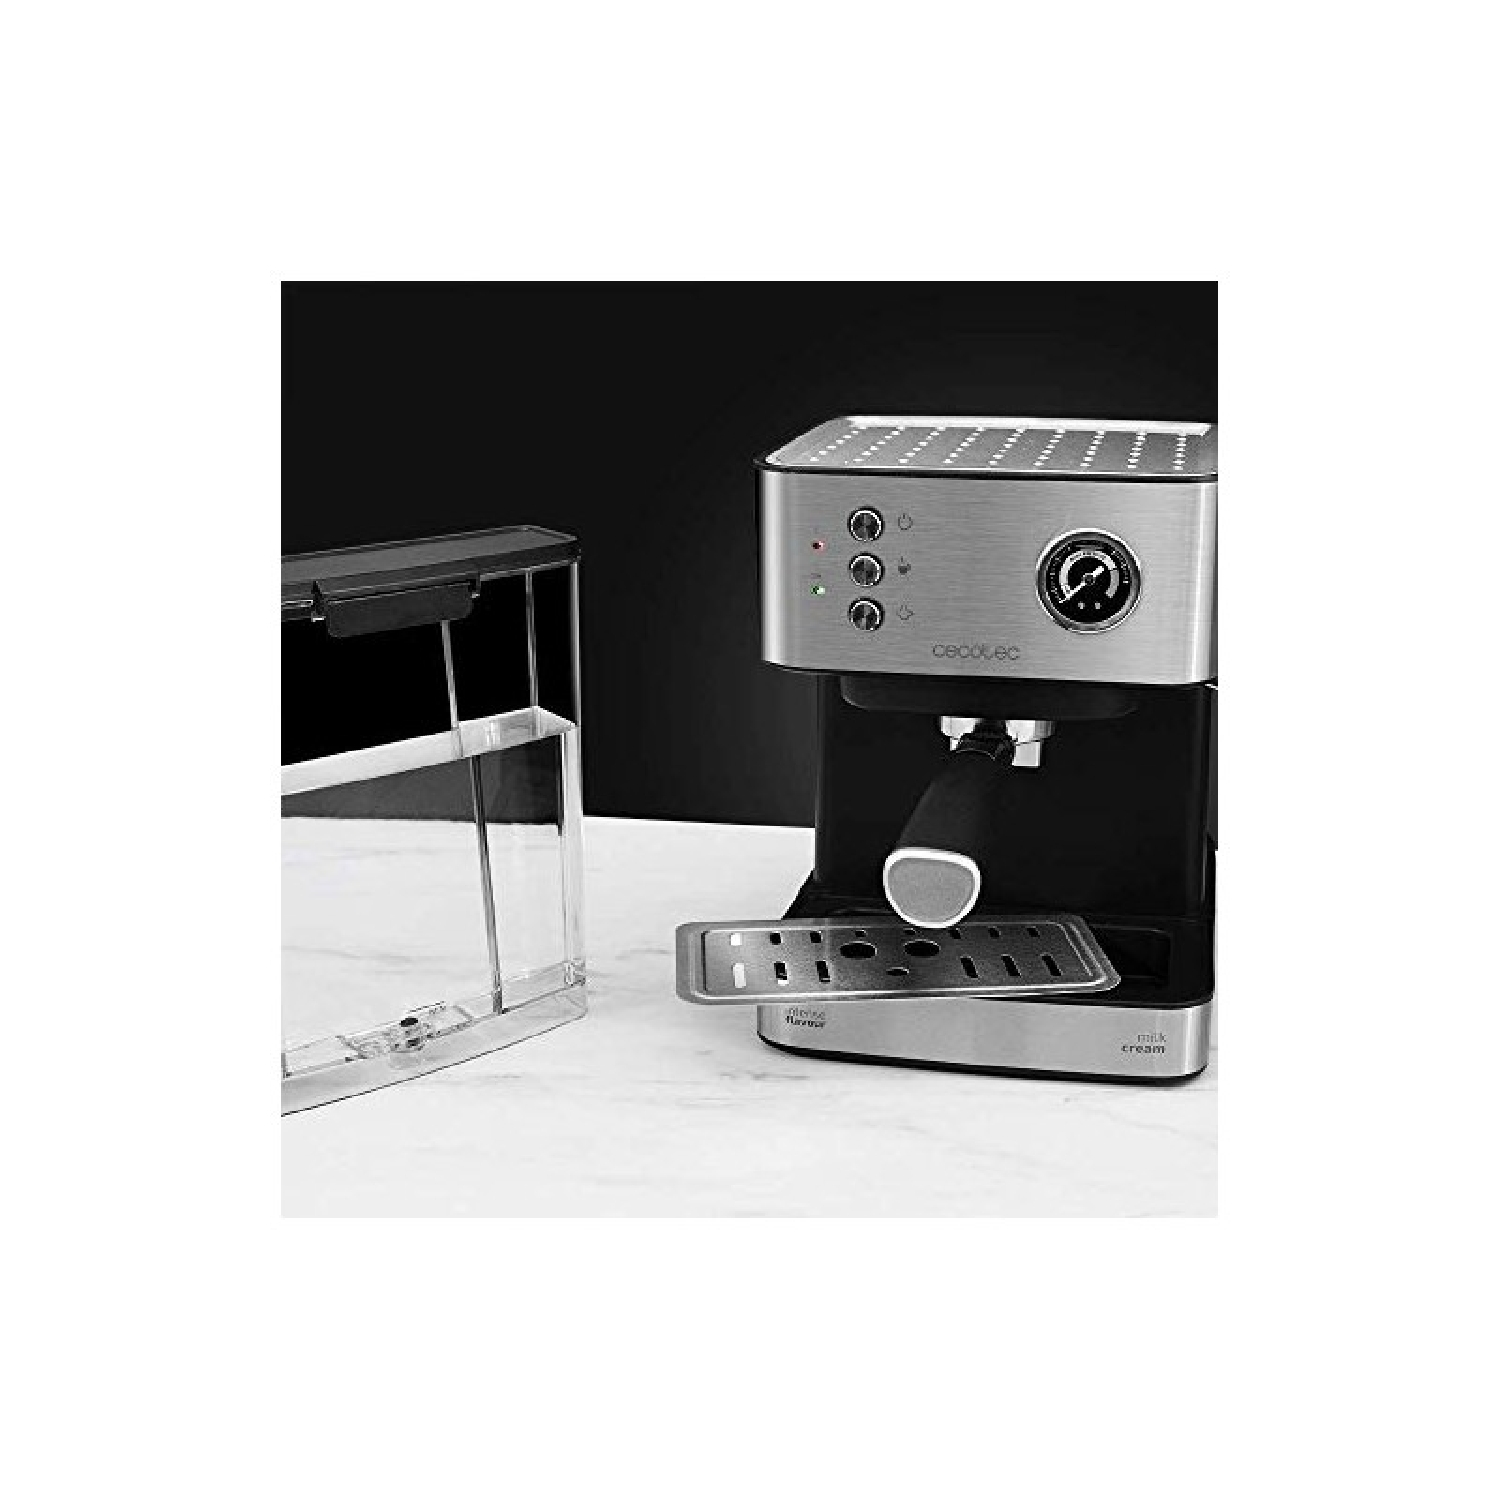 CECOTEC Power Espresso 20 Silber Espressomaschine Professionale